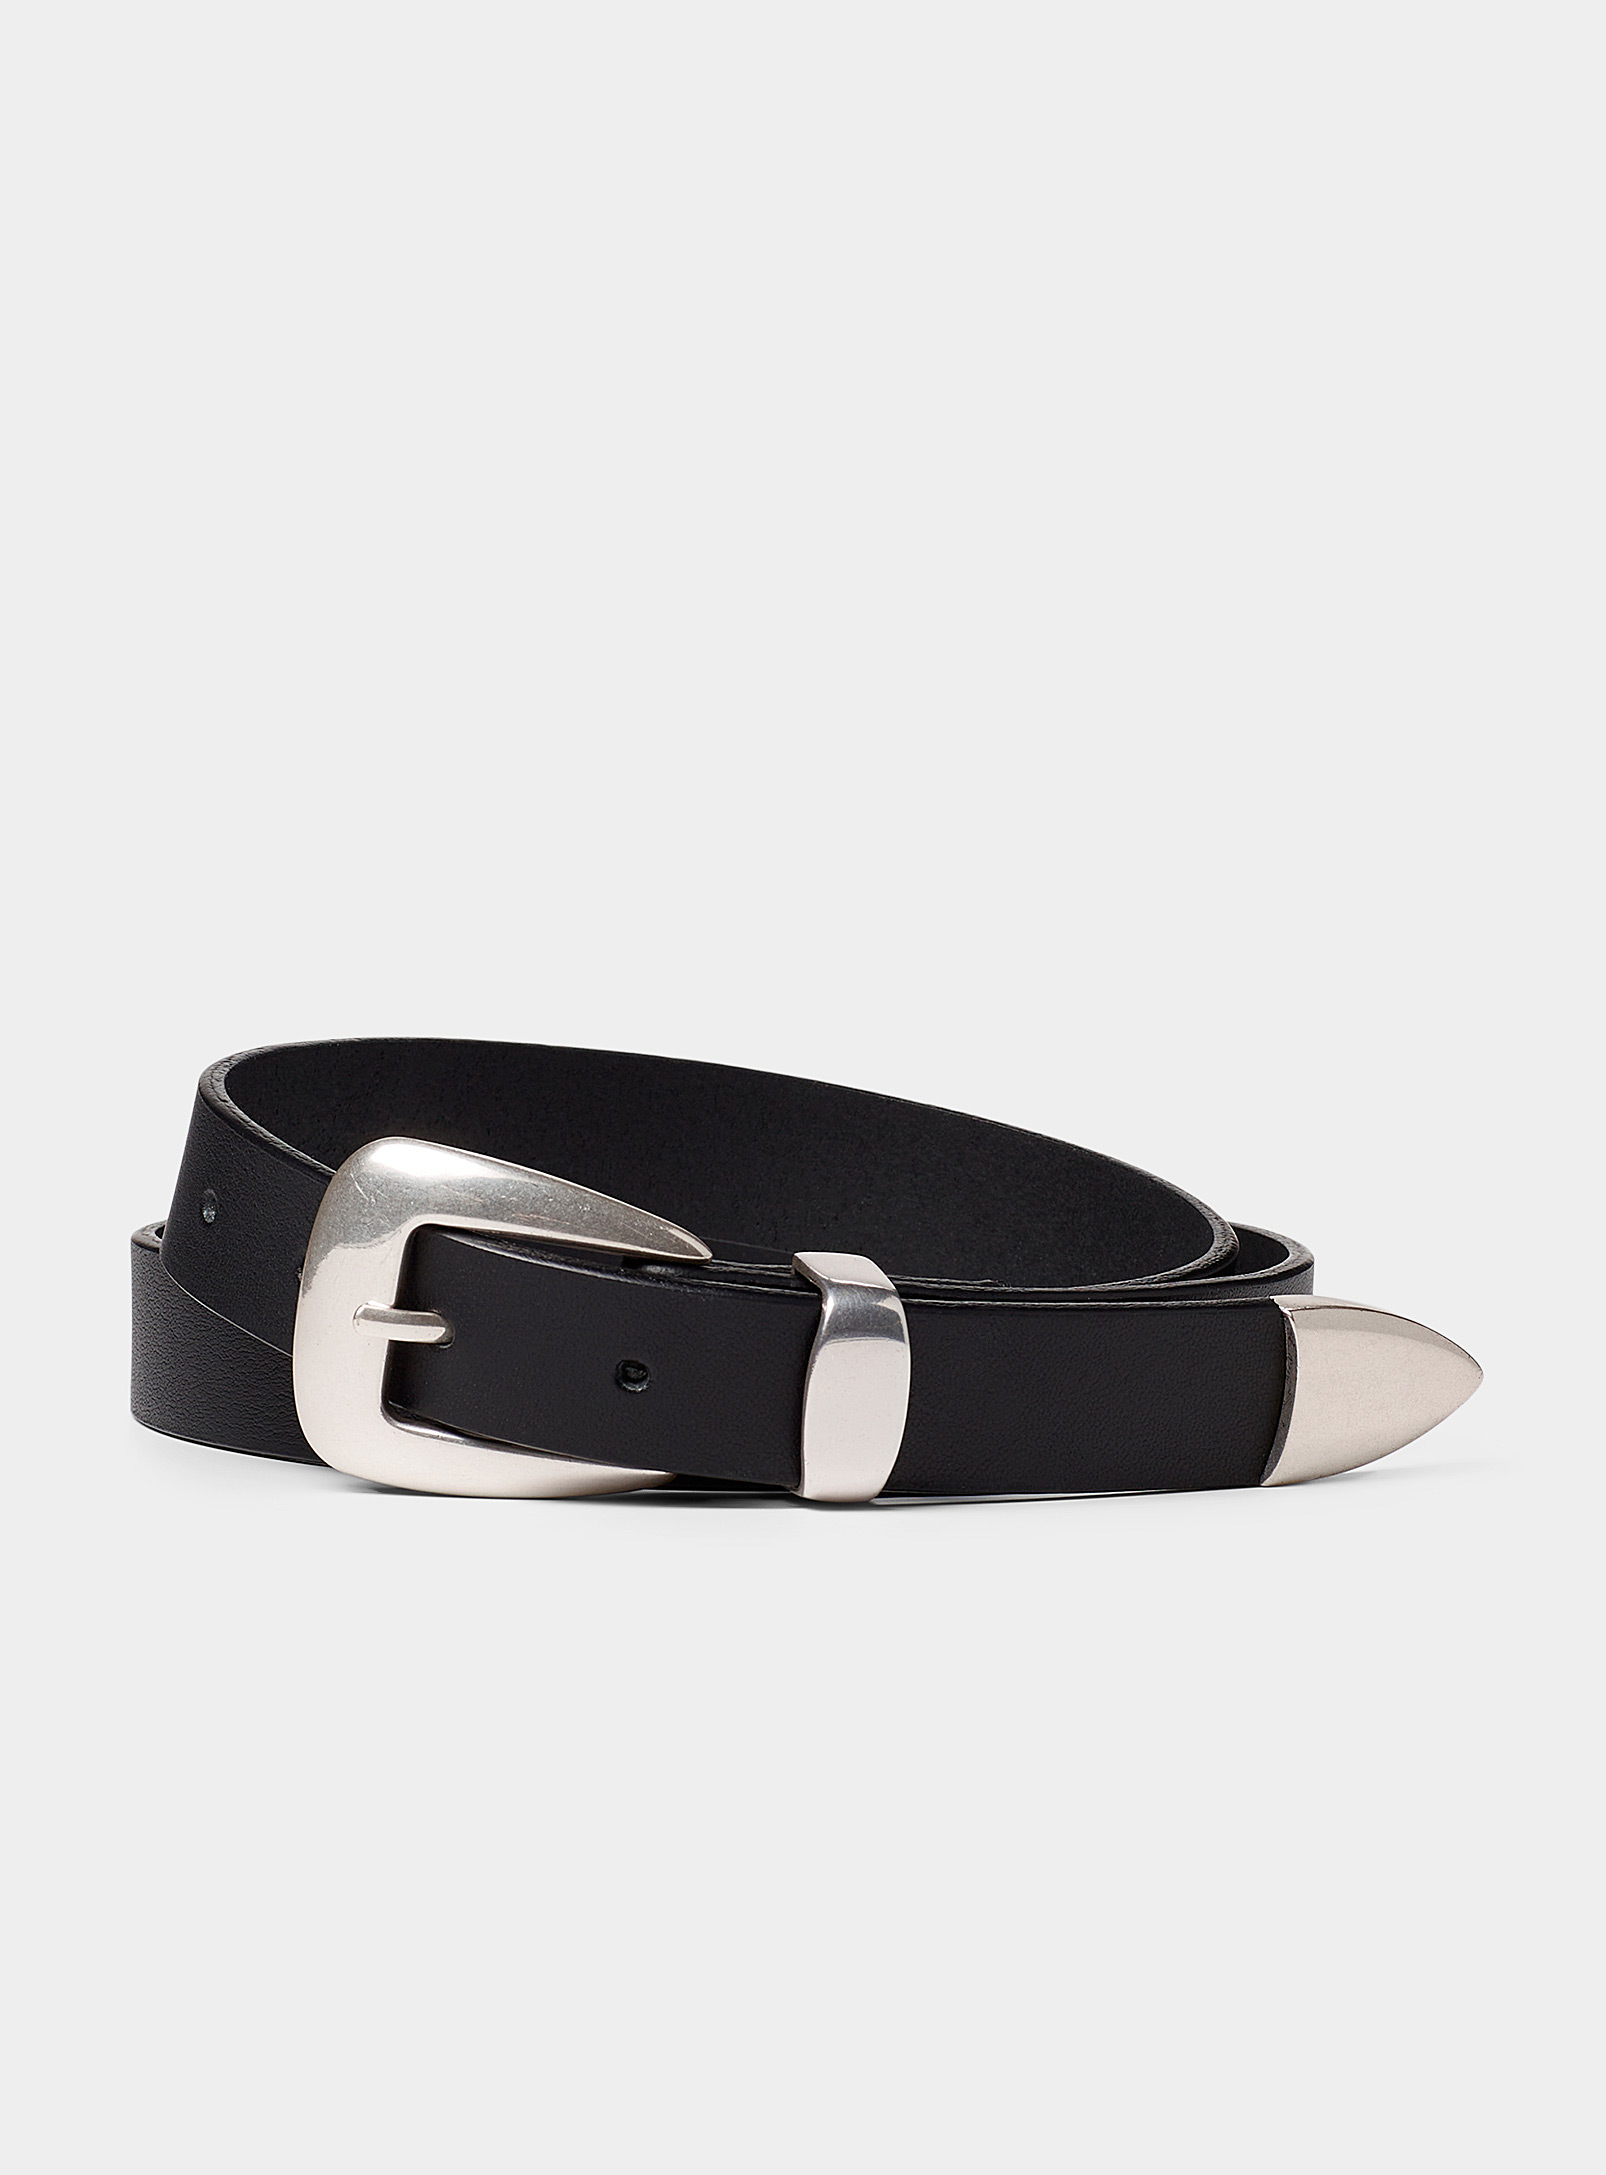 Le 31 - Men's Genuine leather belt